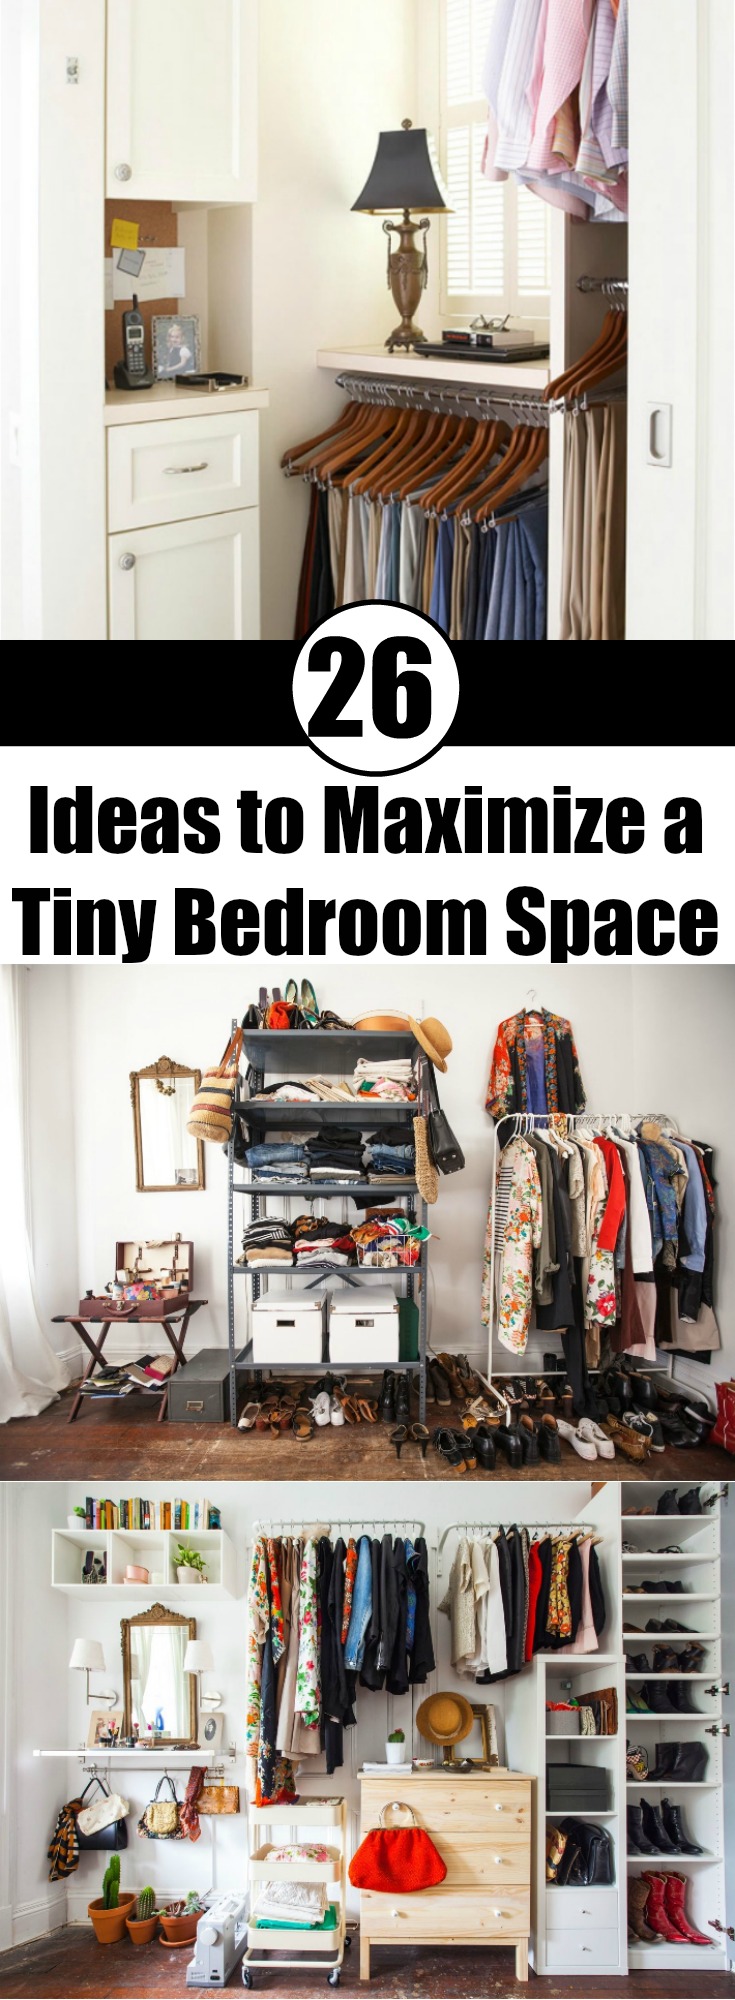 26 Ideas to Maximize a Tiny Bedroom Space